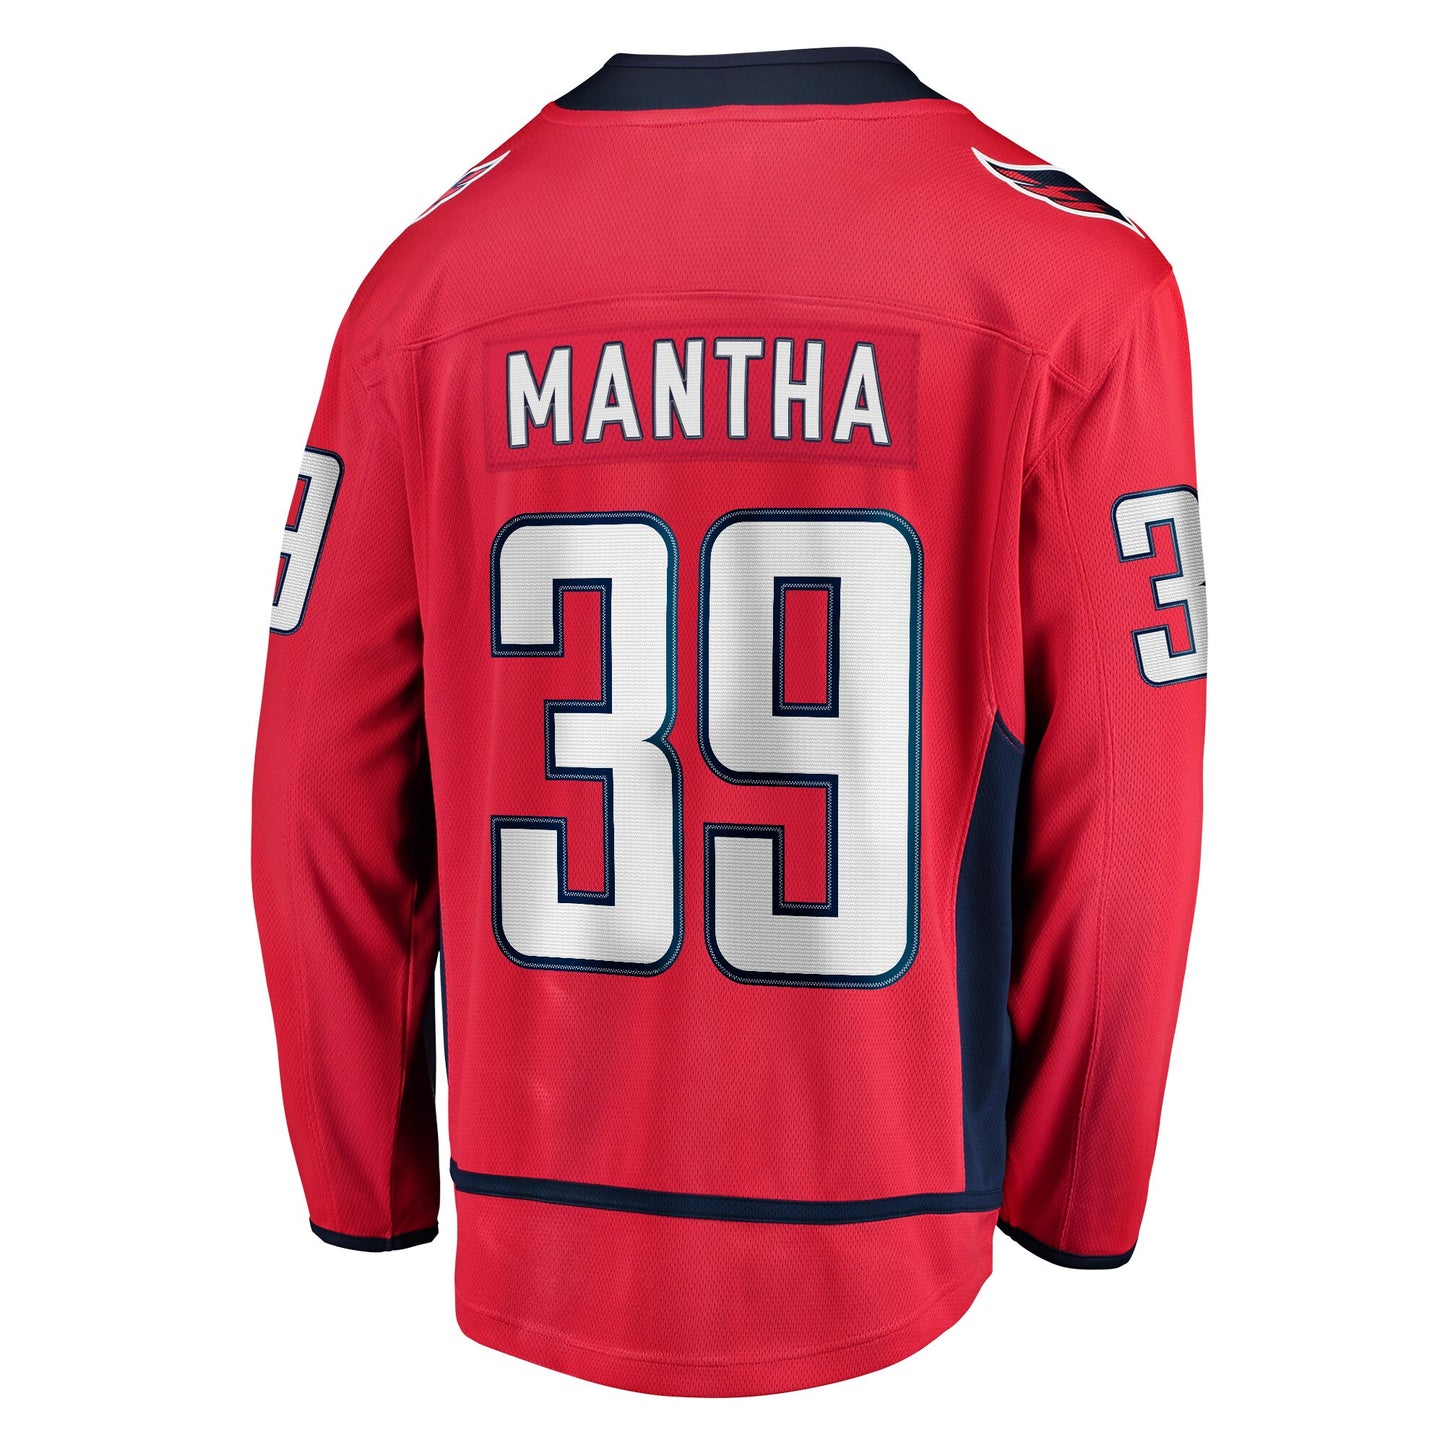 Anthony Mantha Washington Capitals Fanatics Branded 2017/18 Home Breakaway Replica Jersey - Red